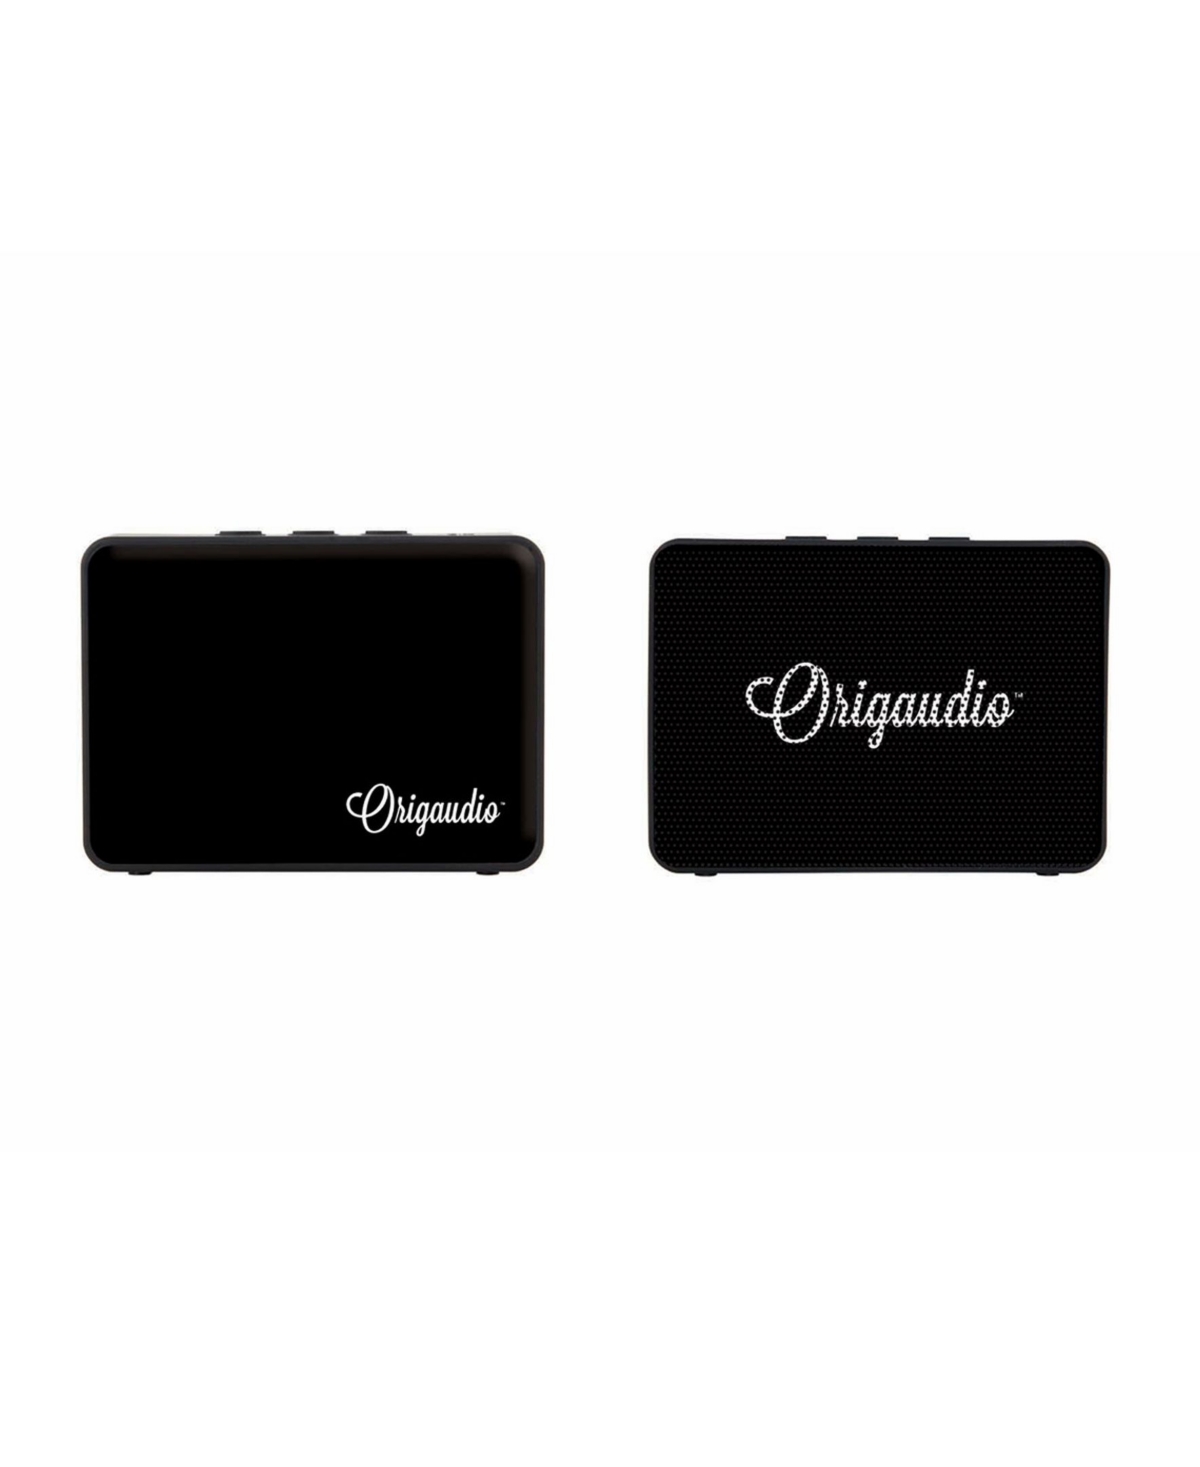 Origaudio Boxanne Bluetooth Speaker - Compact Portable Speaker